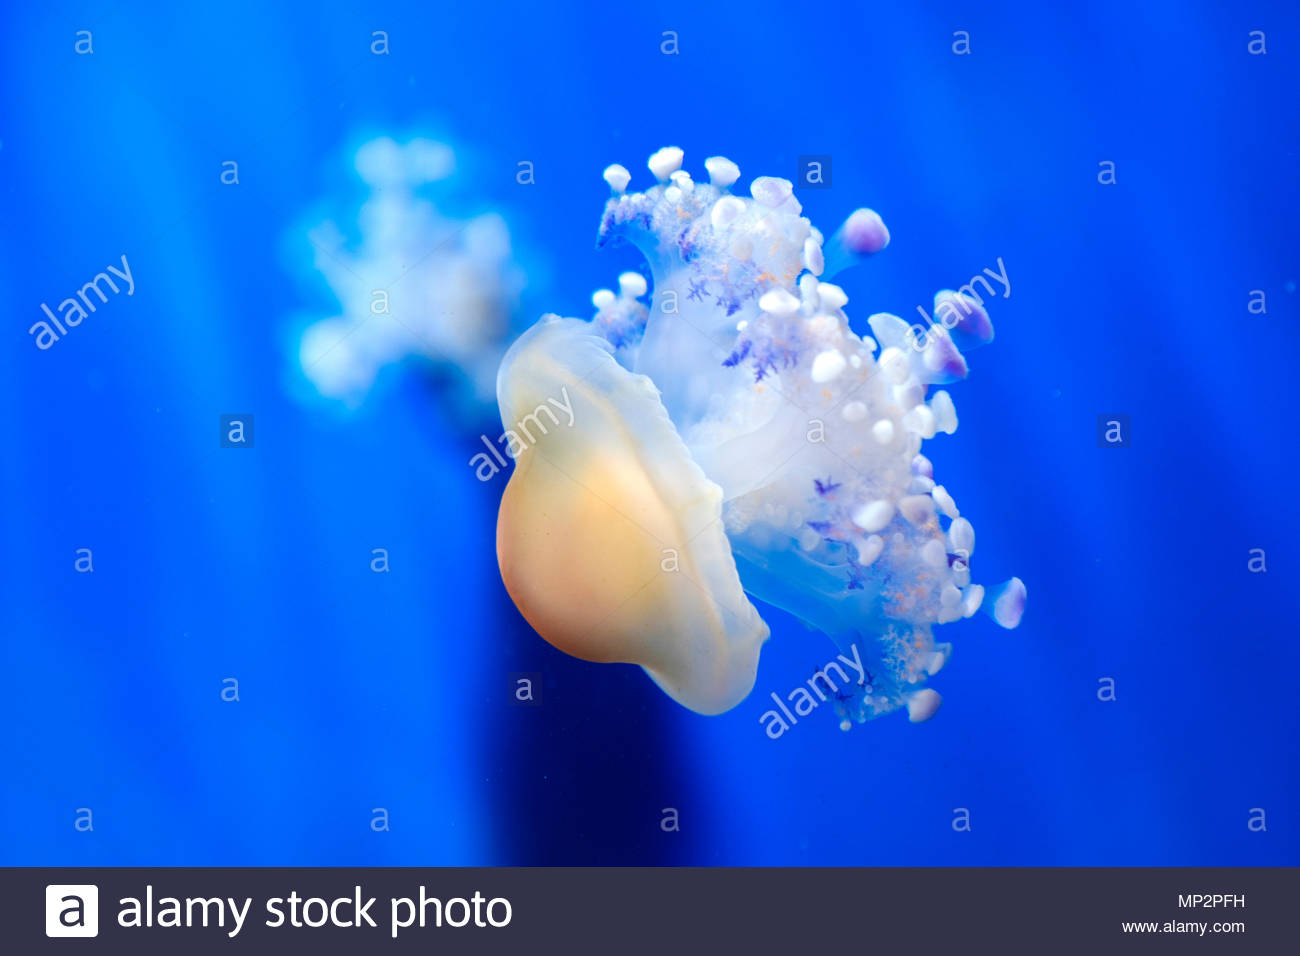 mediterranean jelly fried egg jellyfish cotiloriza little jellies